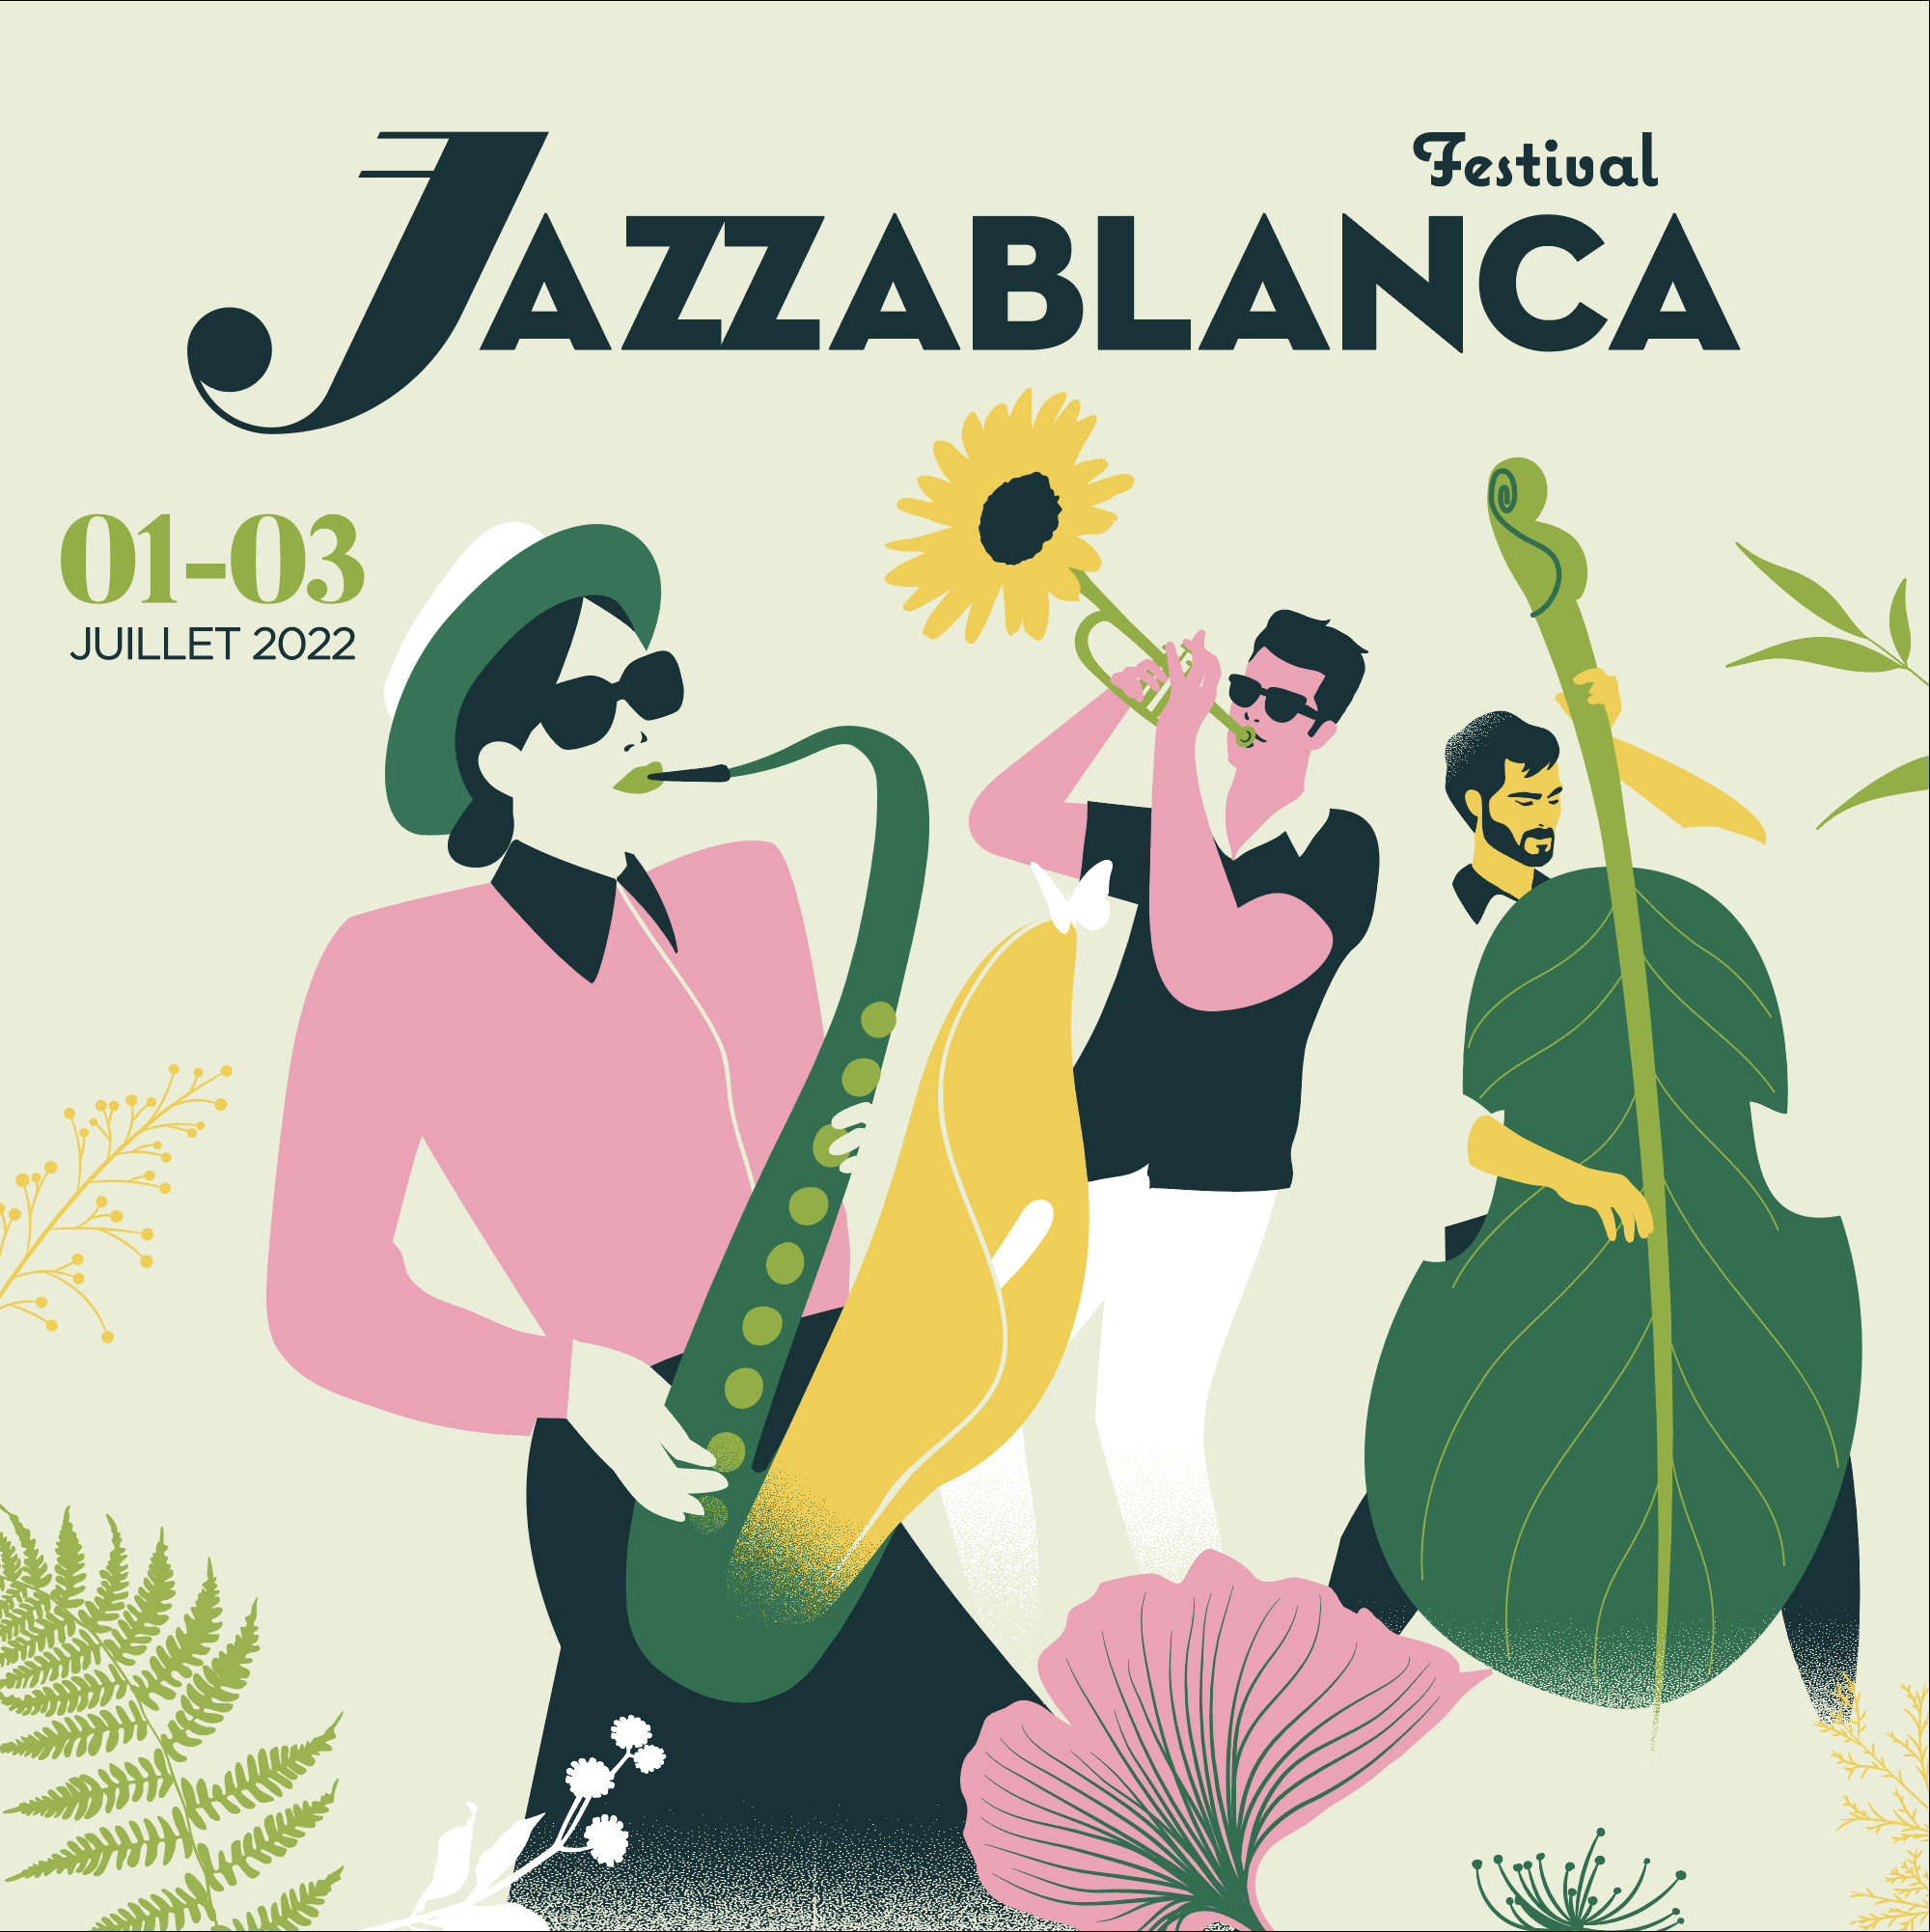 Festival : Jazzablanca revient du 1er au 3 juillet 2022